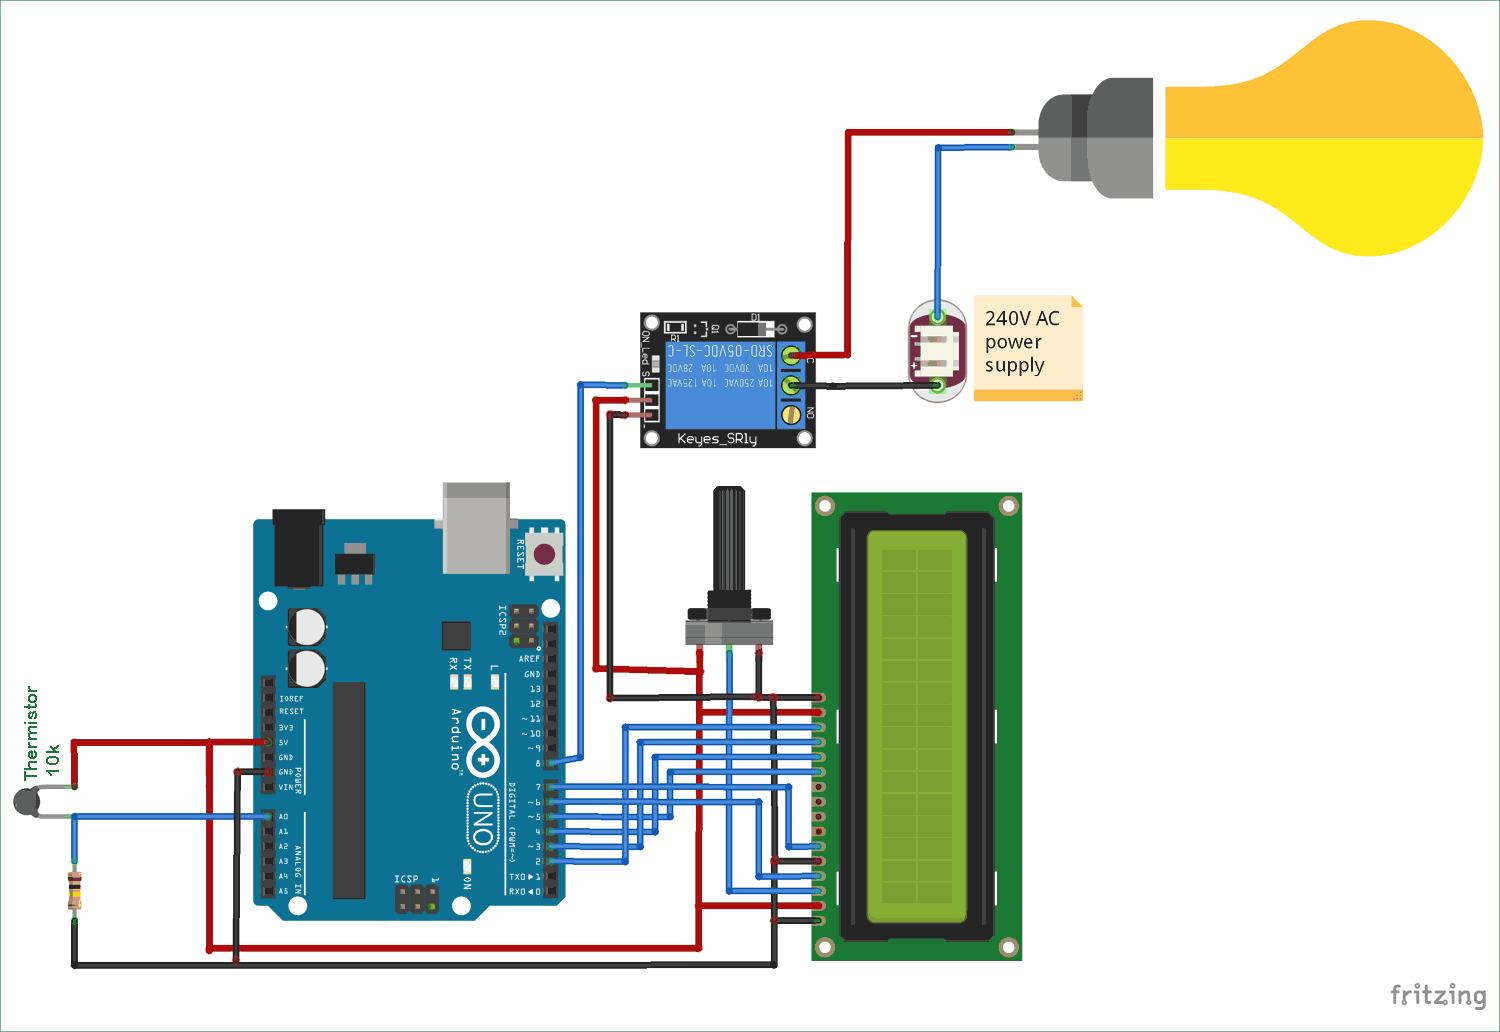 Control Relay using Arduino based on Temperature circuit